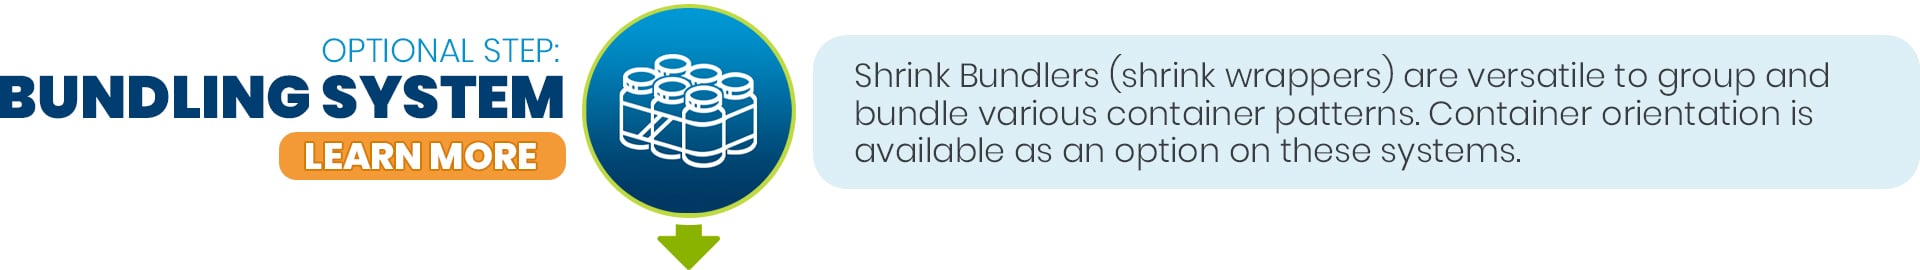 Shrink Bundler - 60bpm Powder - Block